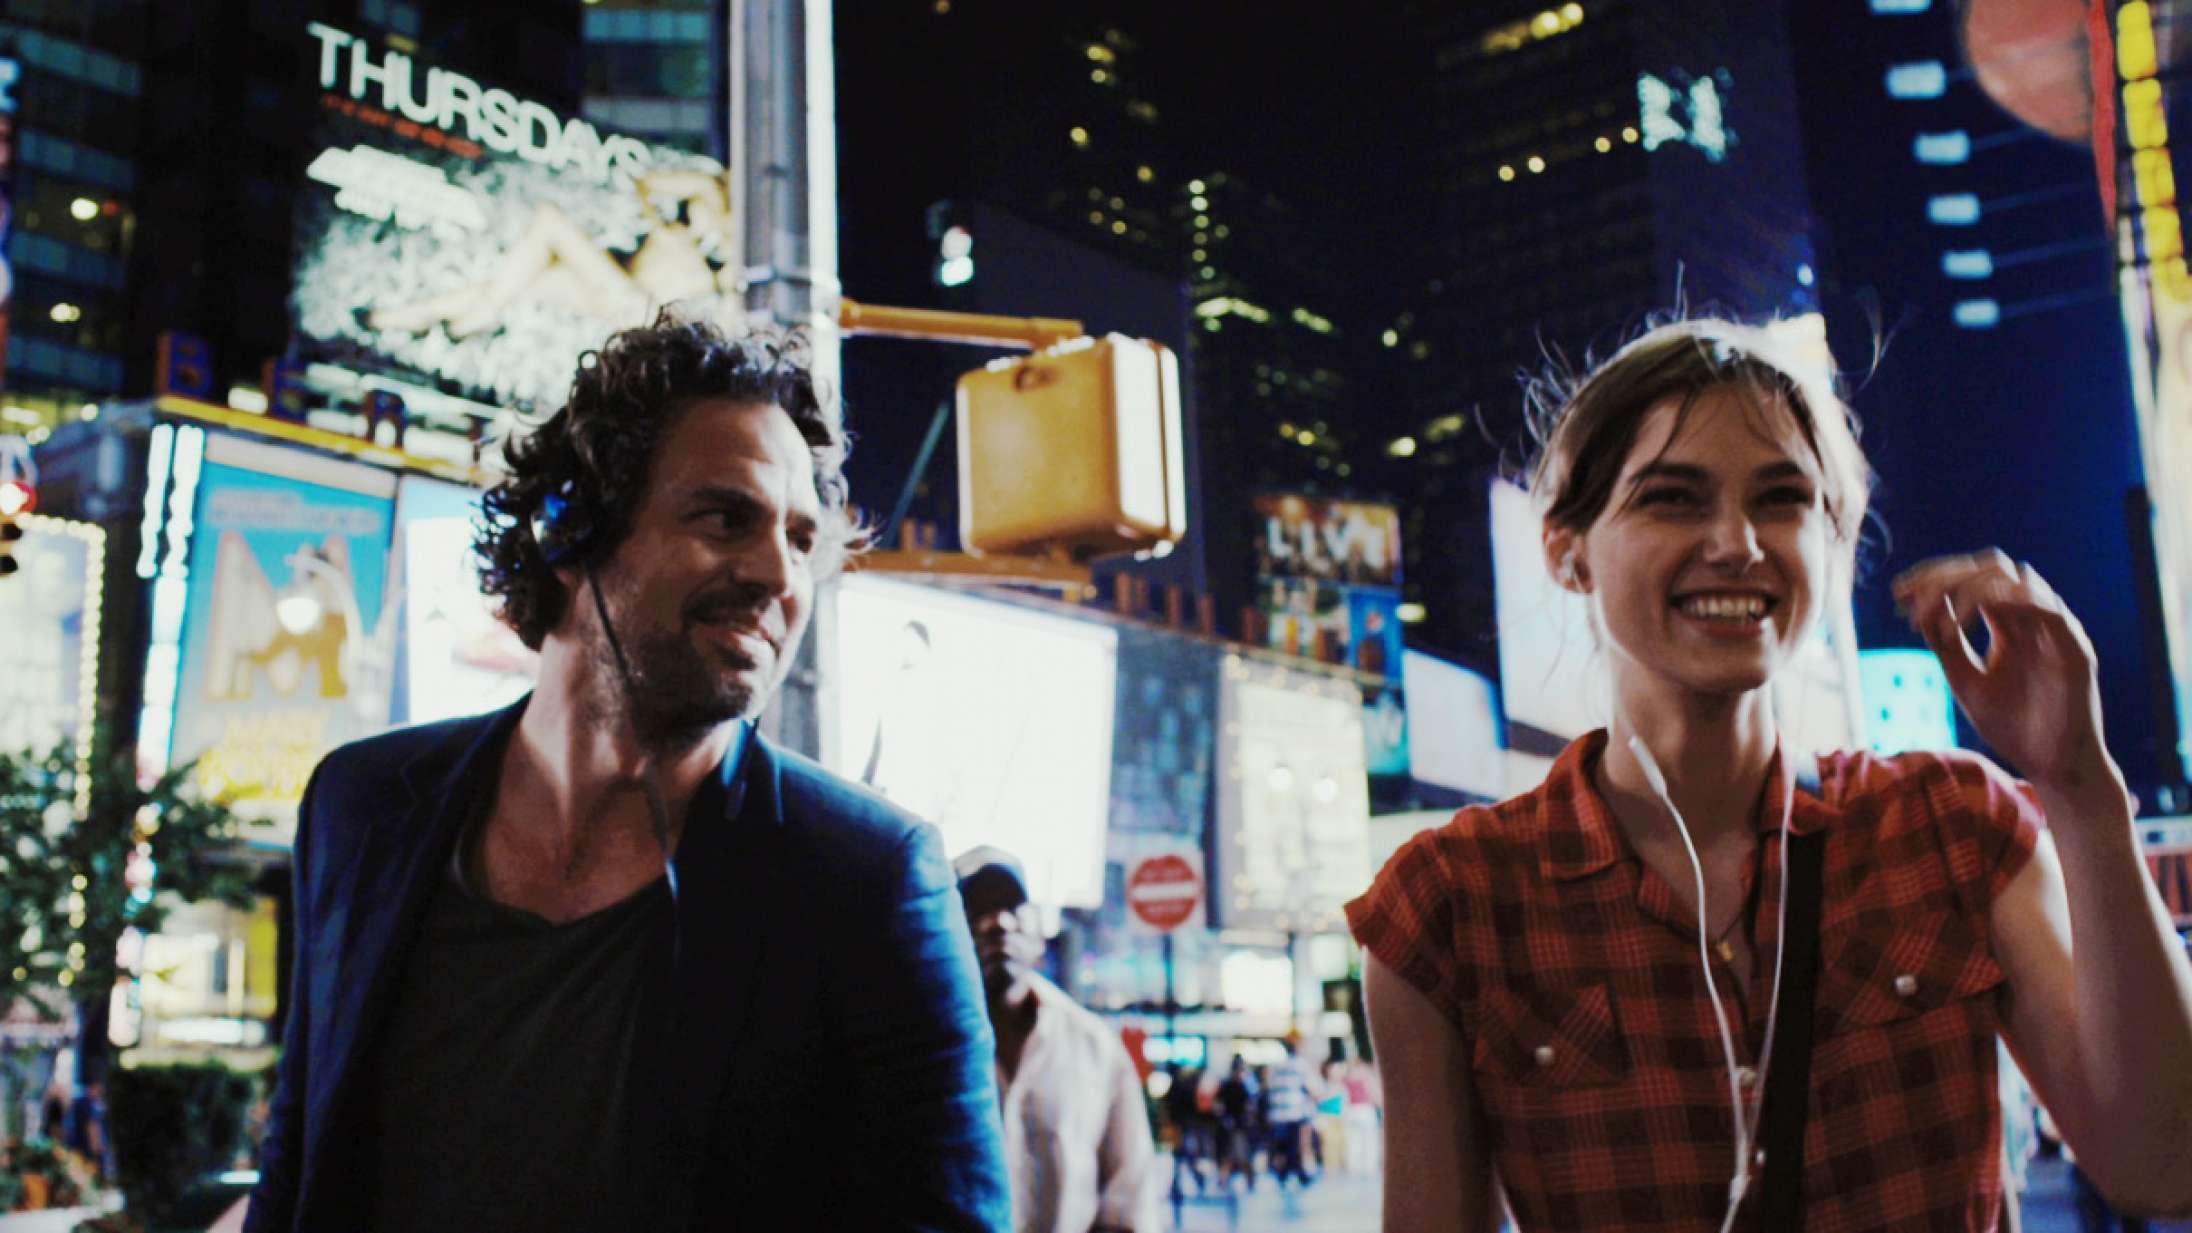 New York, I love you: Syv film, der får os til at savne det store æble i en coronatid